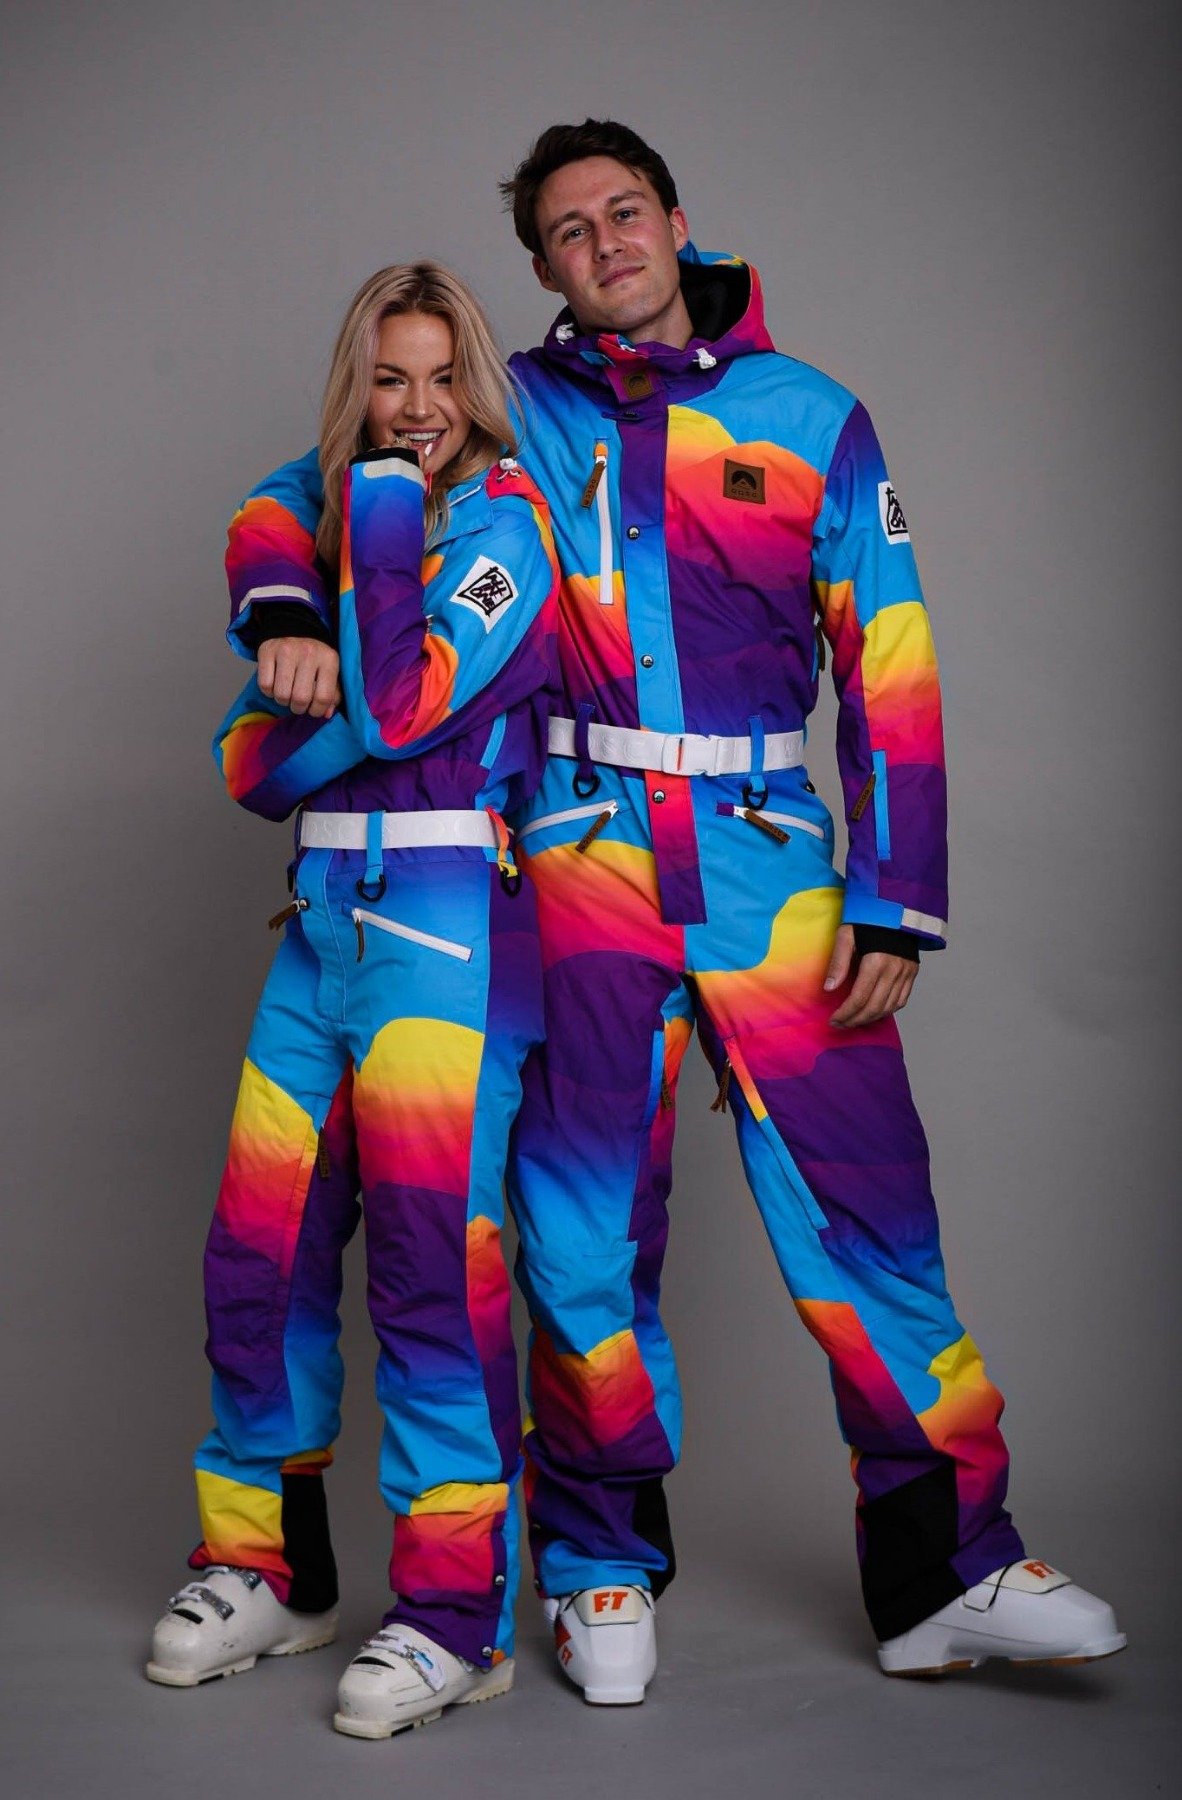 OOSC colourblock women's ski suit in multi